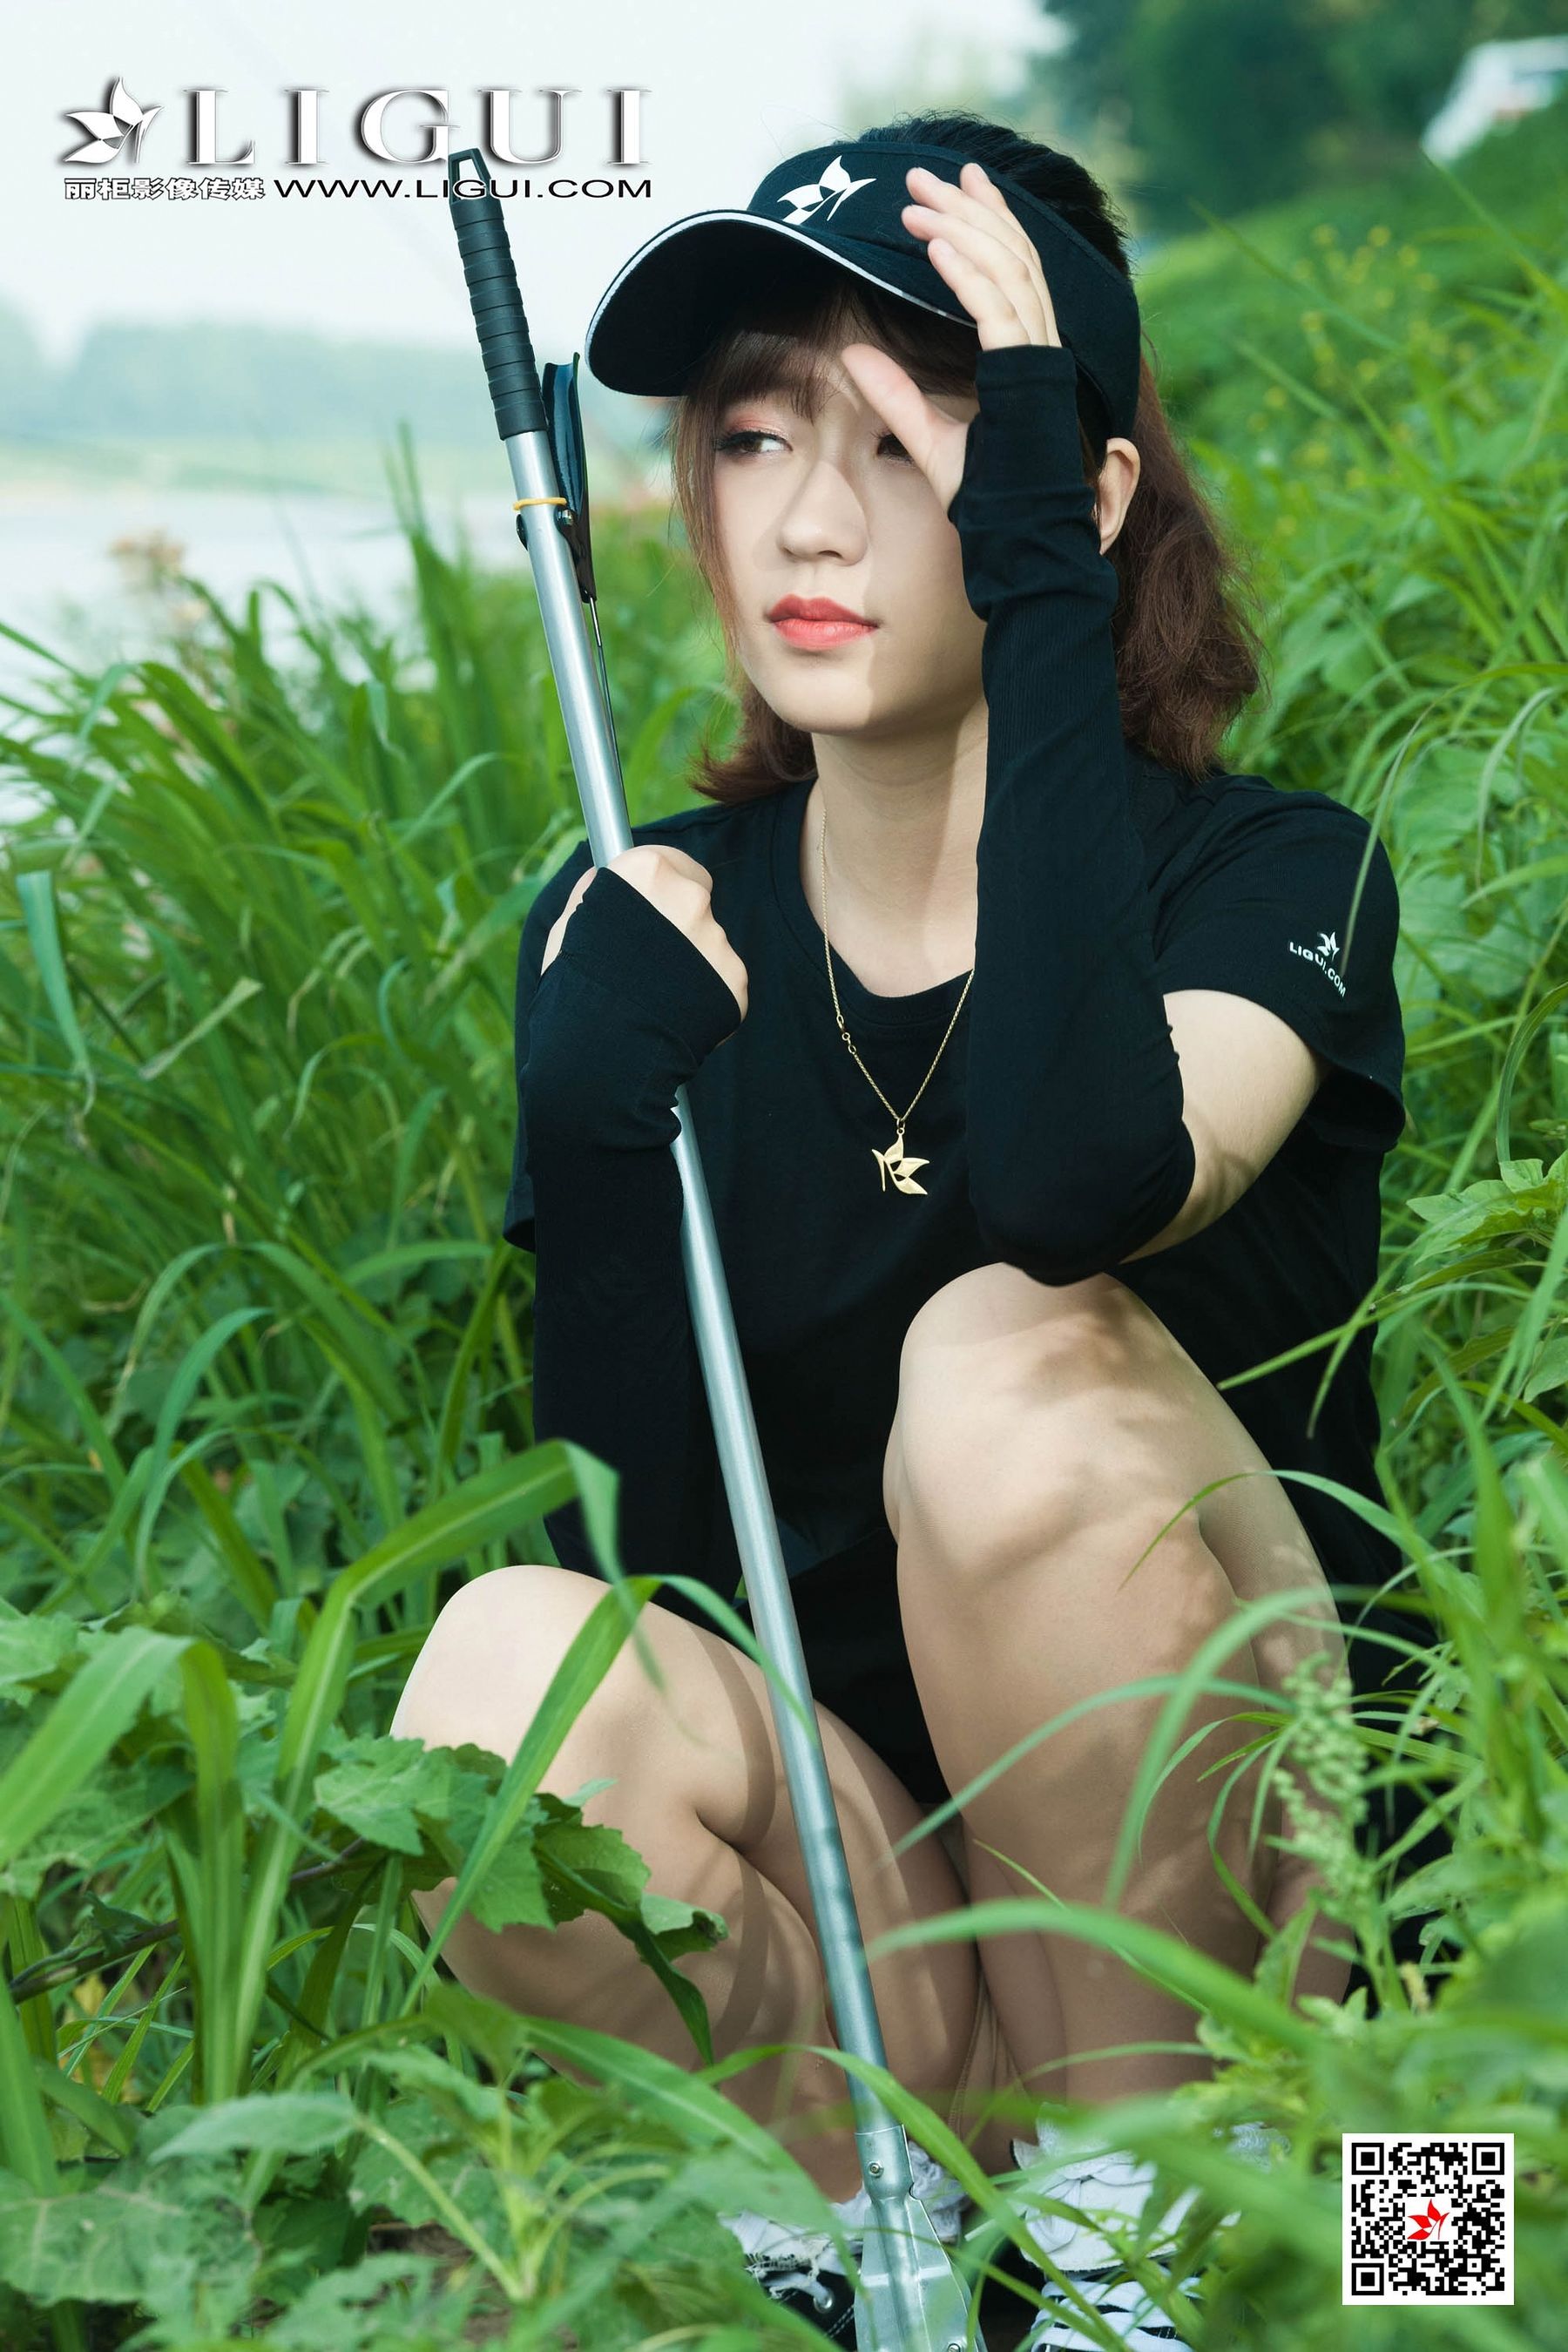 Anna Anna “The Best Fishing Girl” [丽柜Ligui] Photo Album